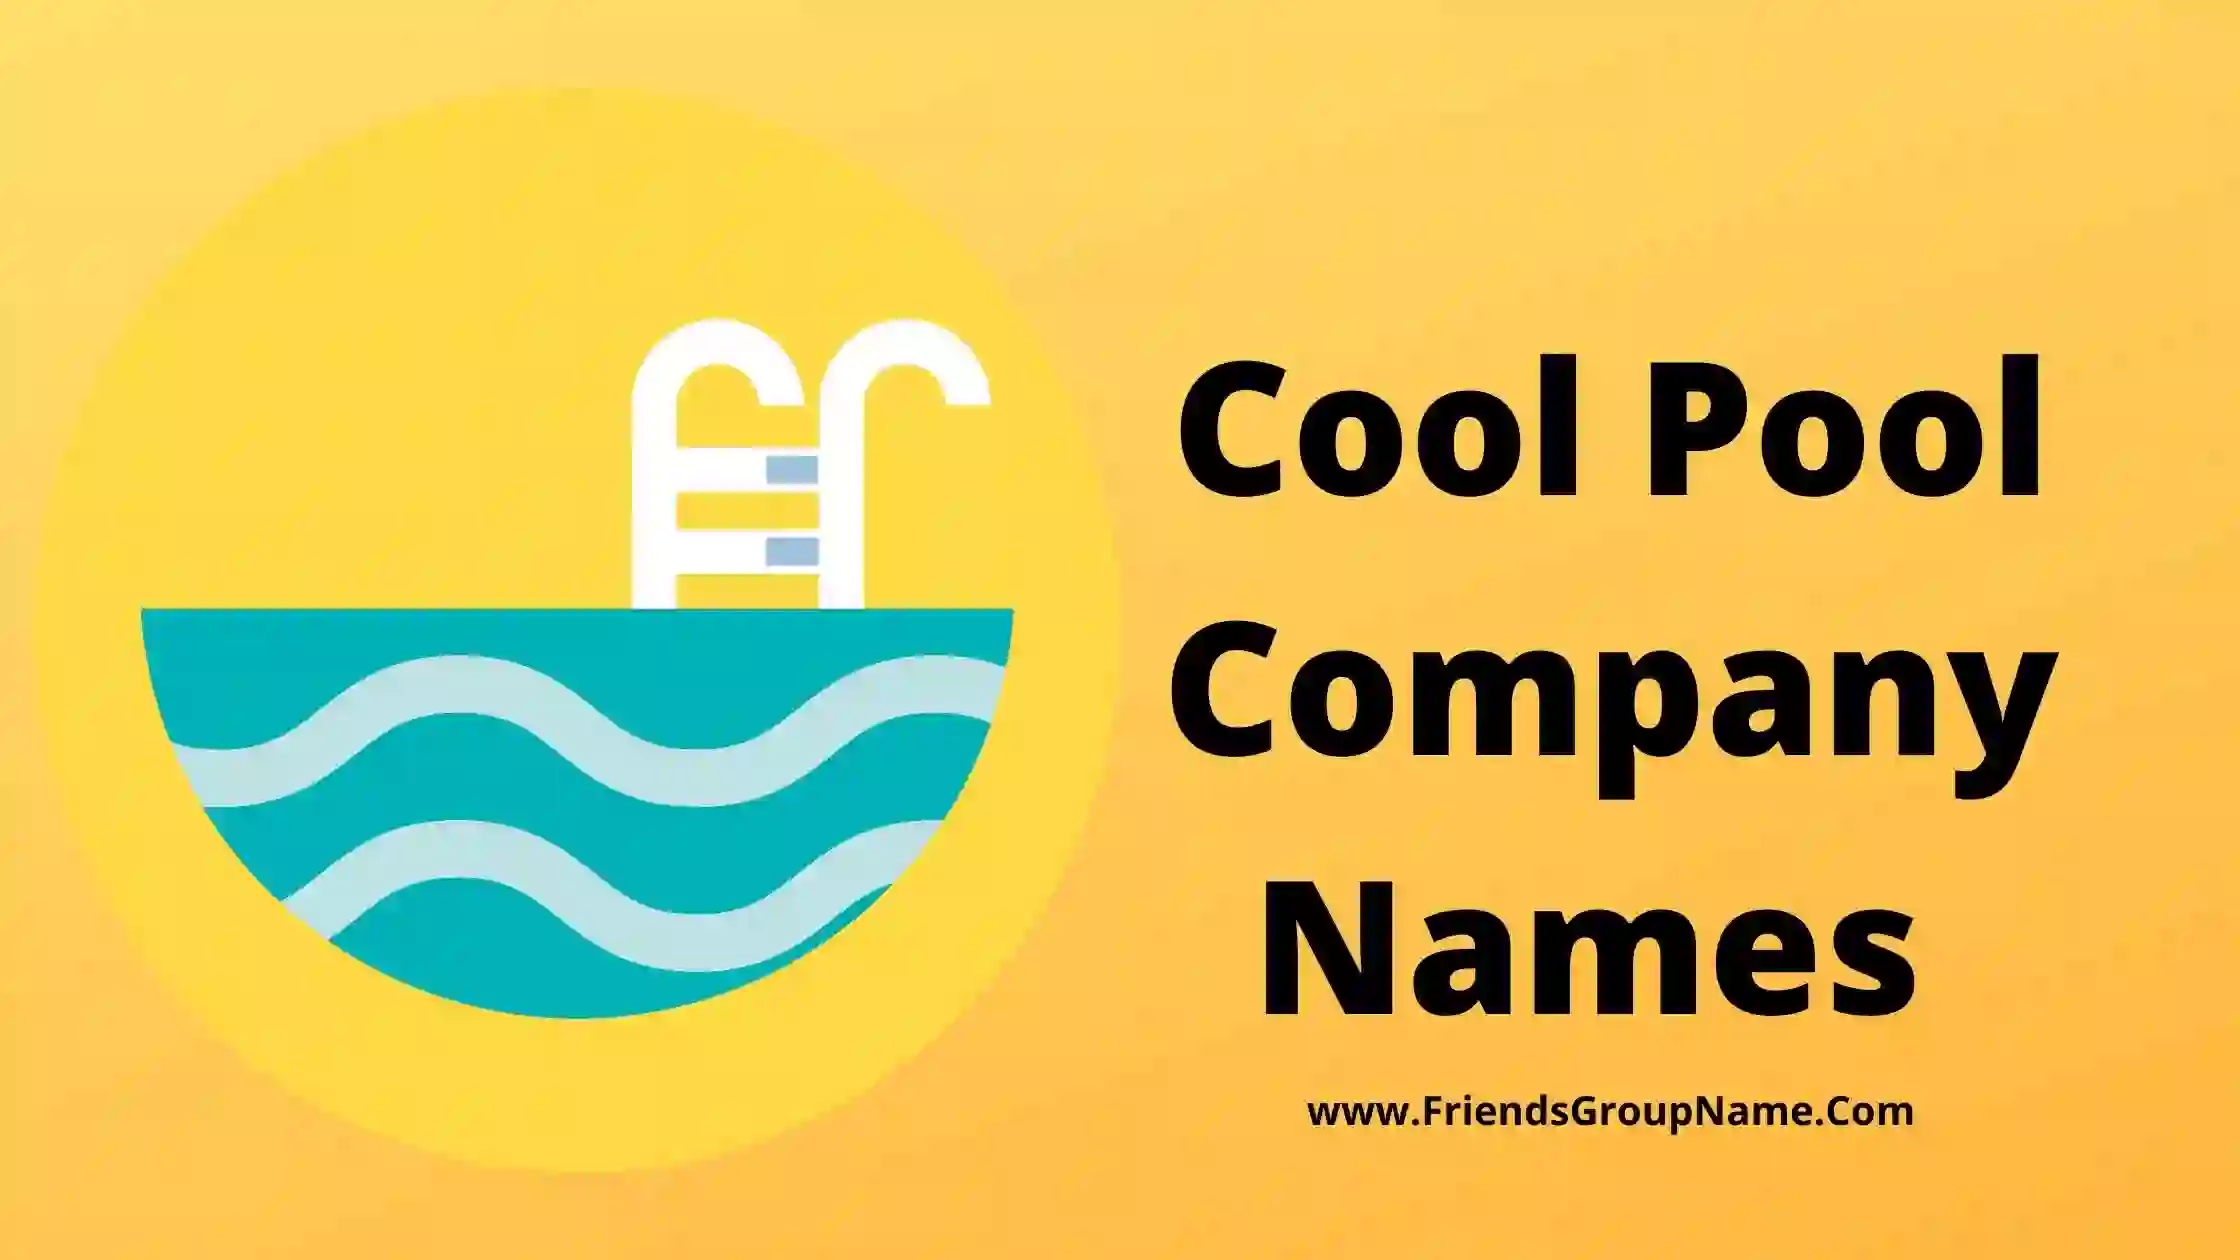 Cool Pool Company Names